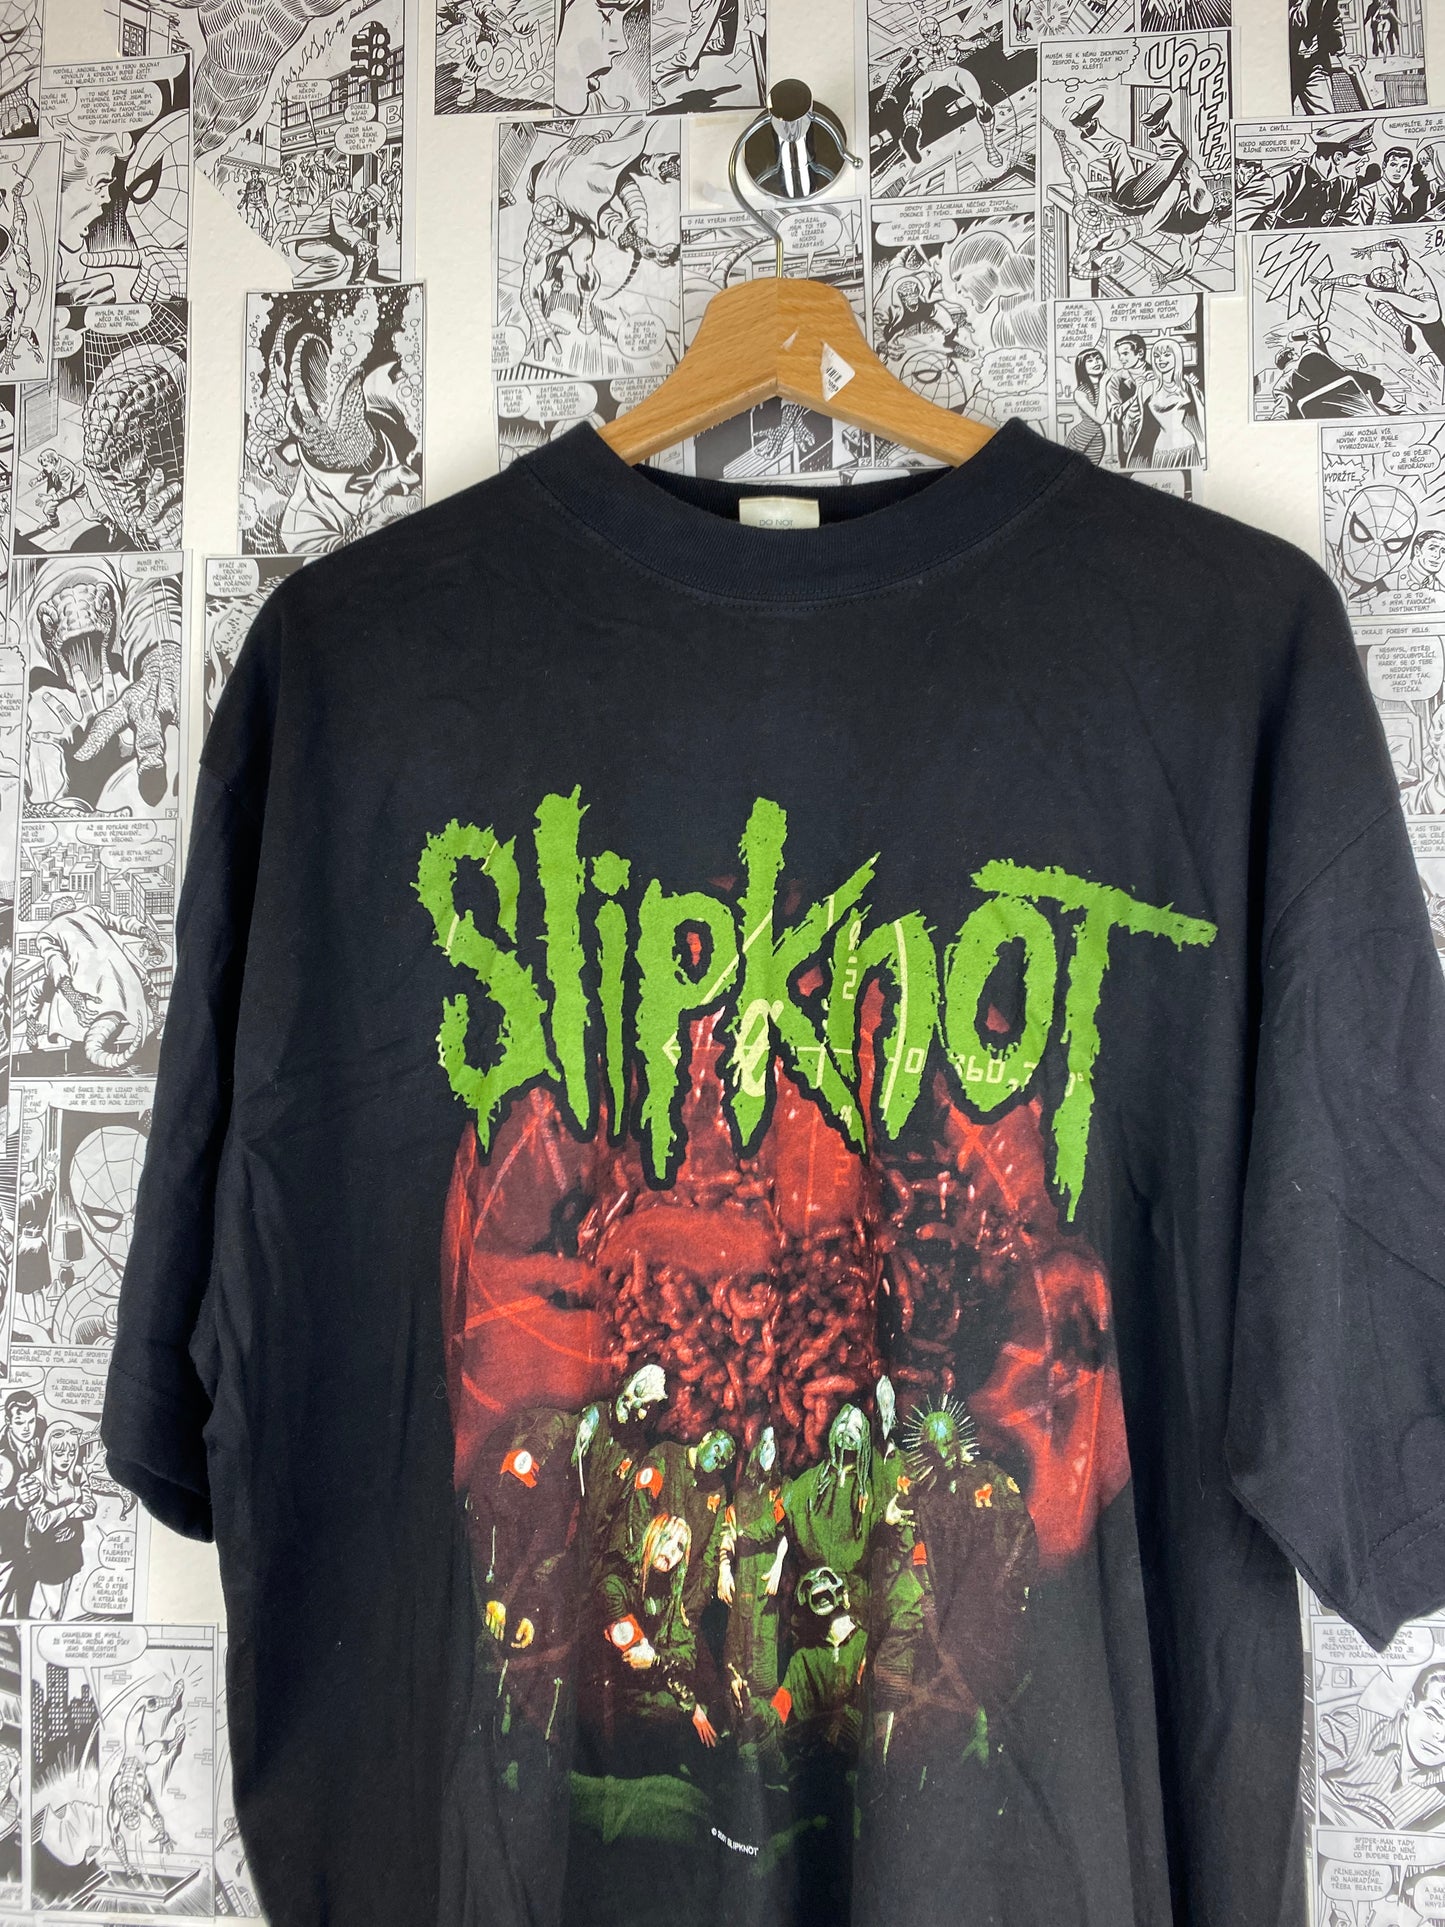 Vintage Slipknot “Maggots” 2001 t-shirt